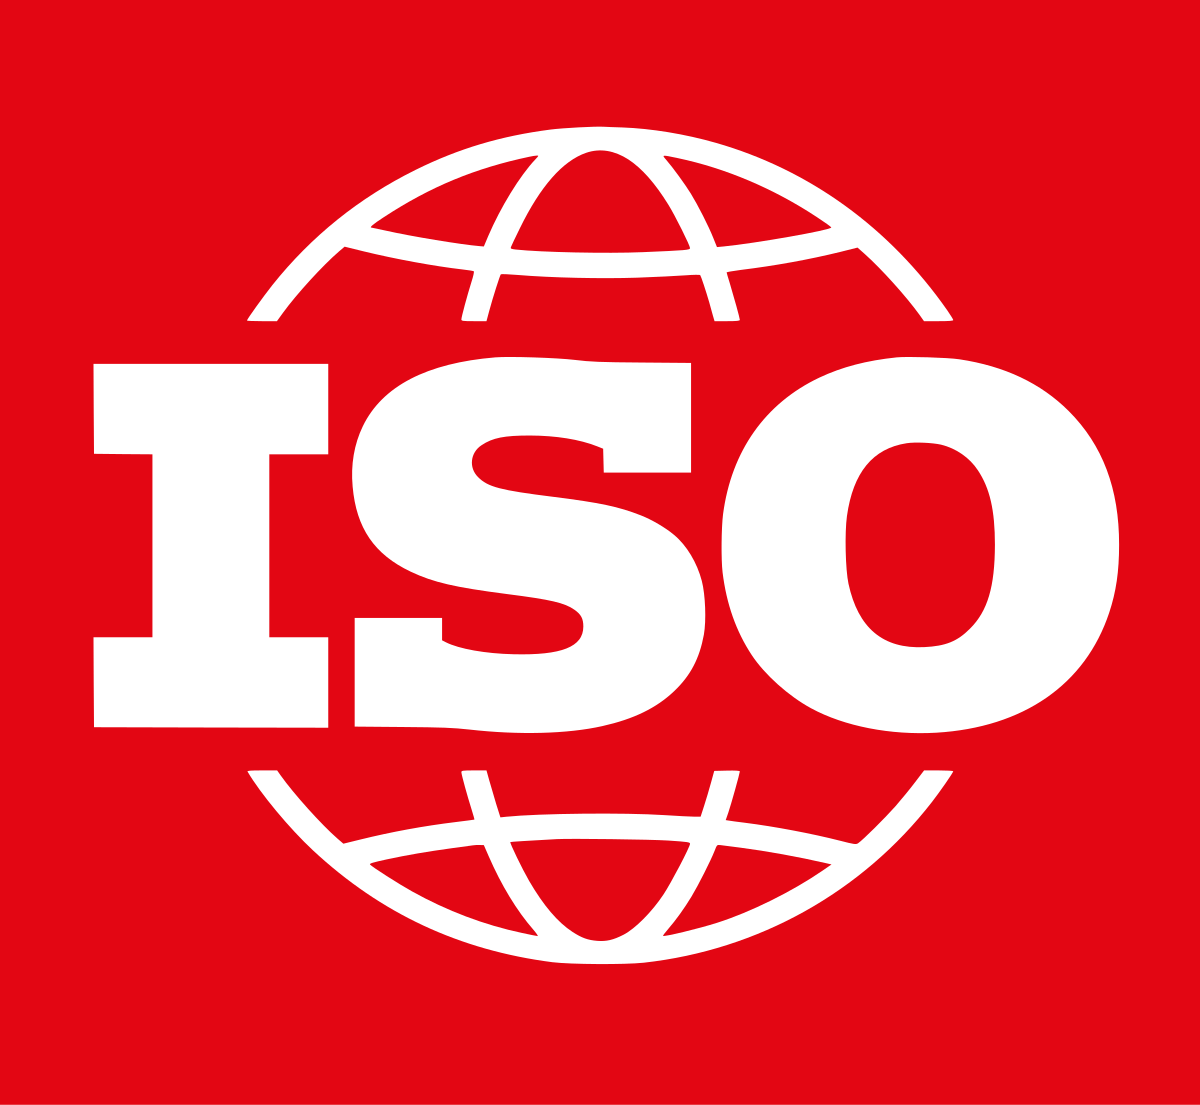 Organization's Logo - International Organization for Standardization